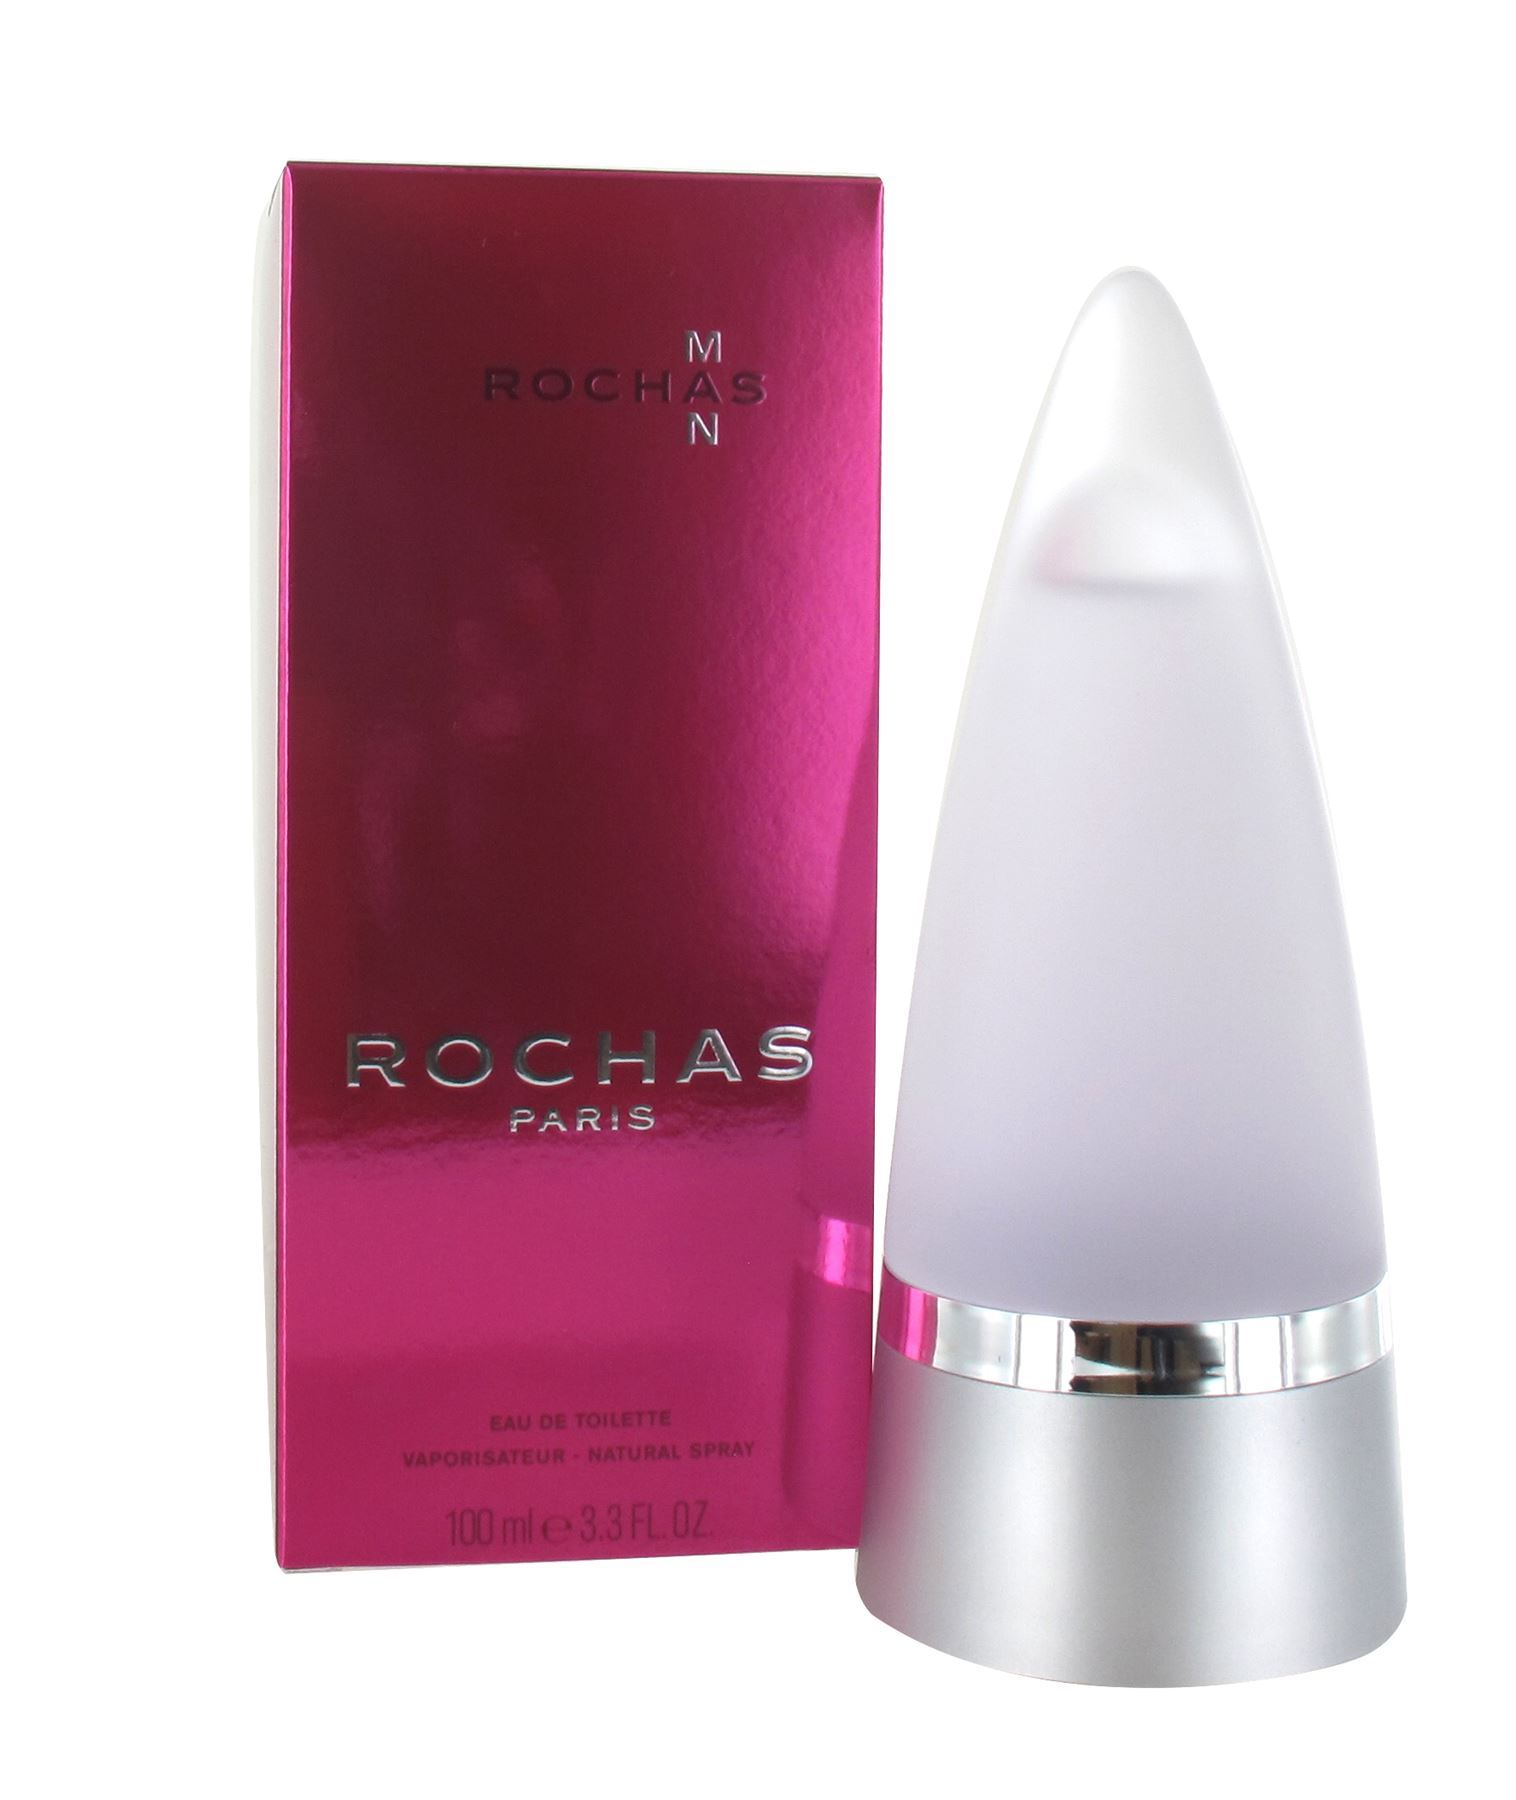 Rochas Man 100ml Eau de Toilette Spray for Him from Perfume Plus Direct